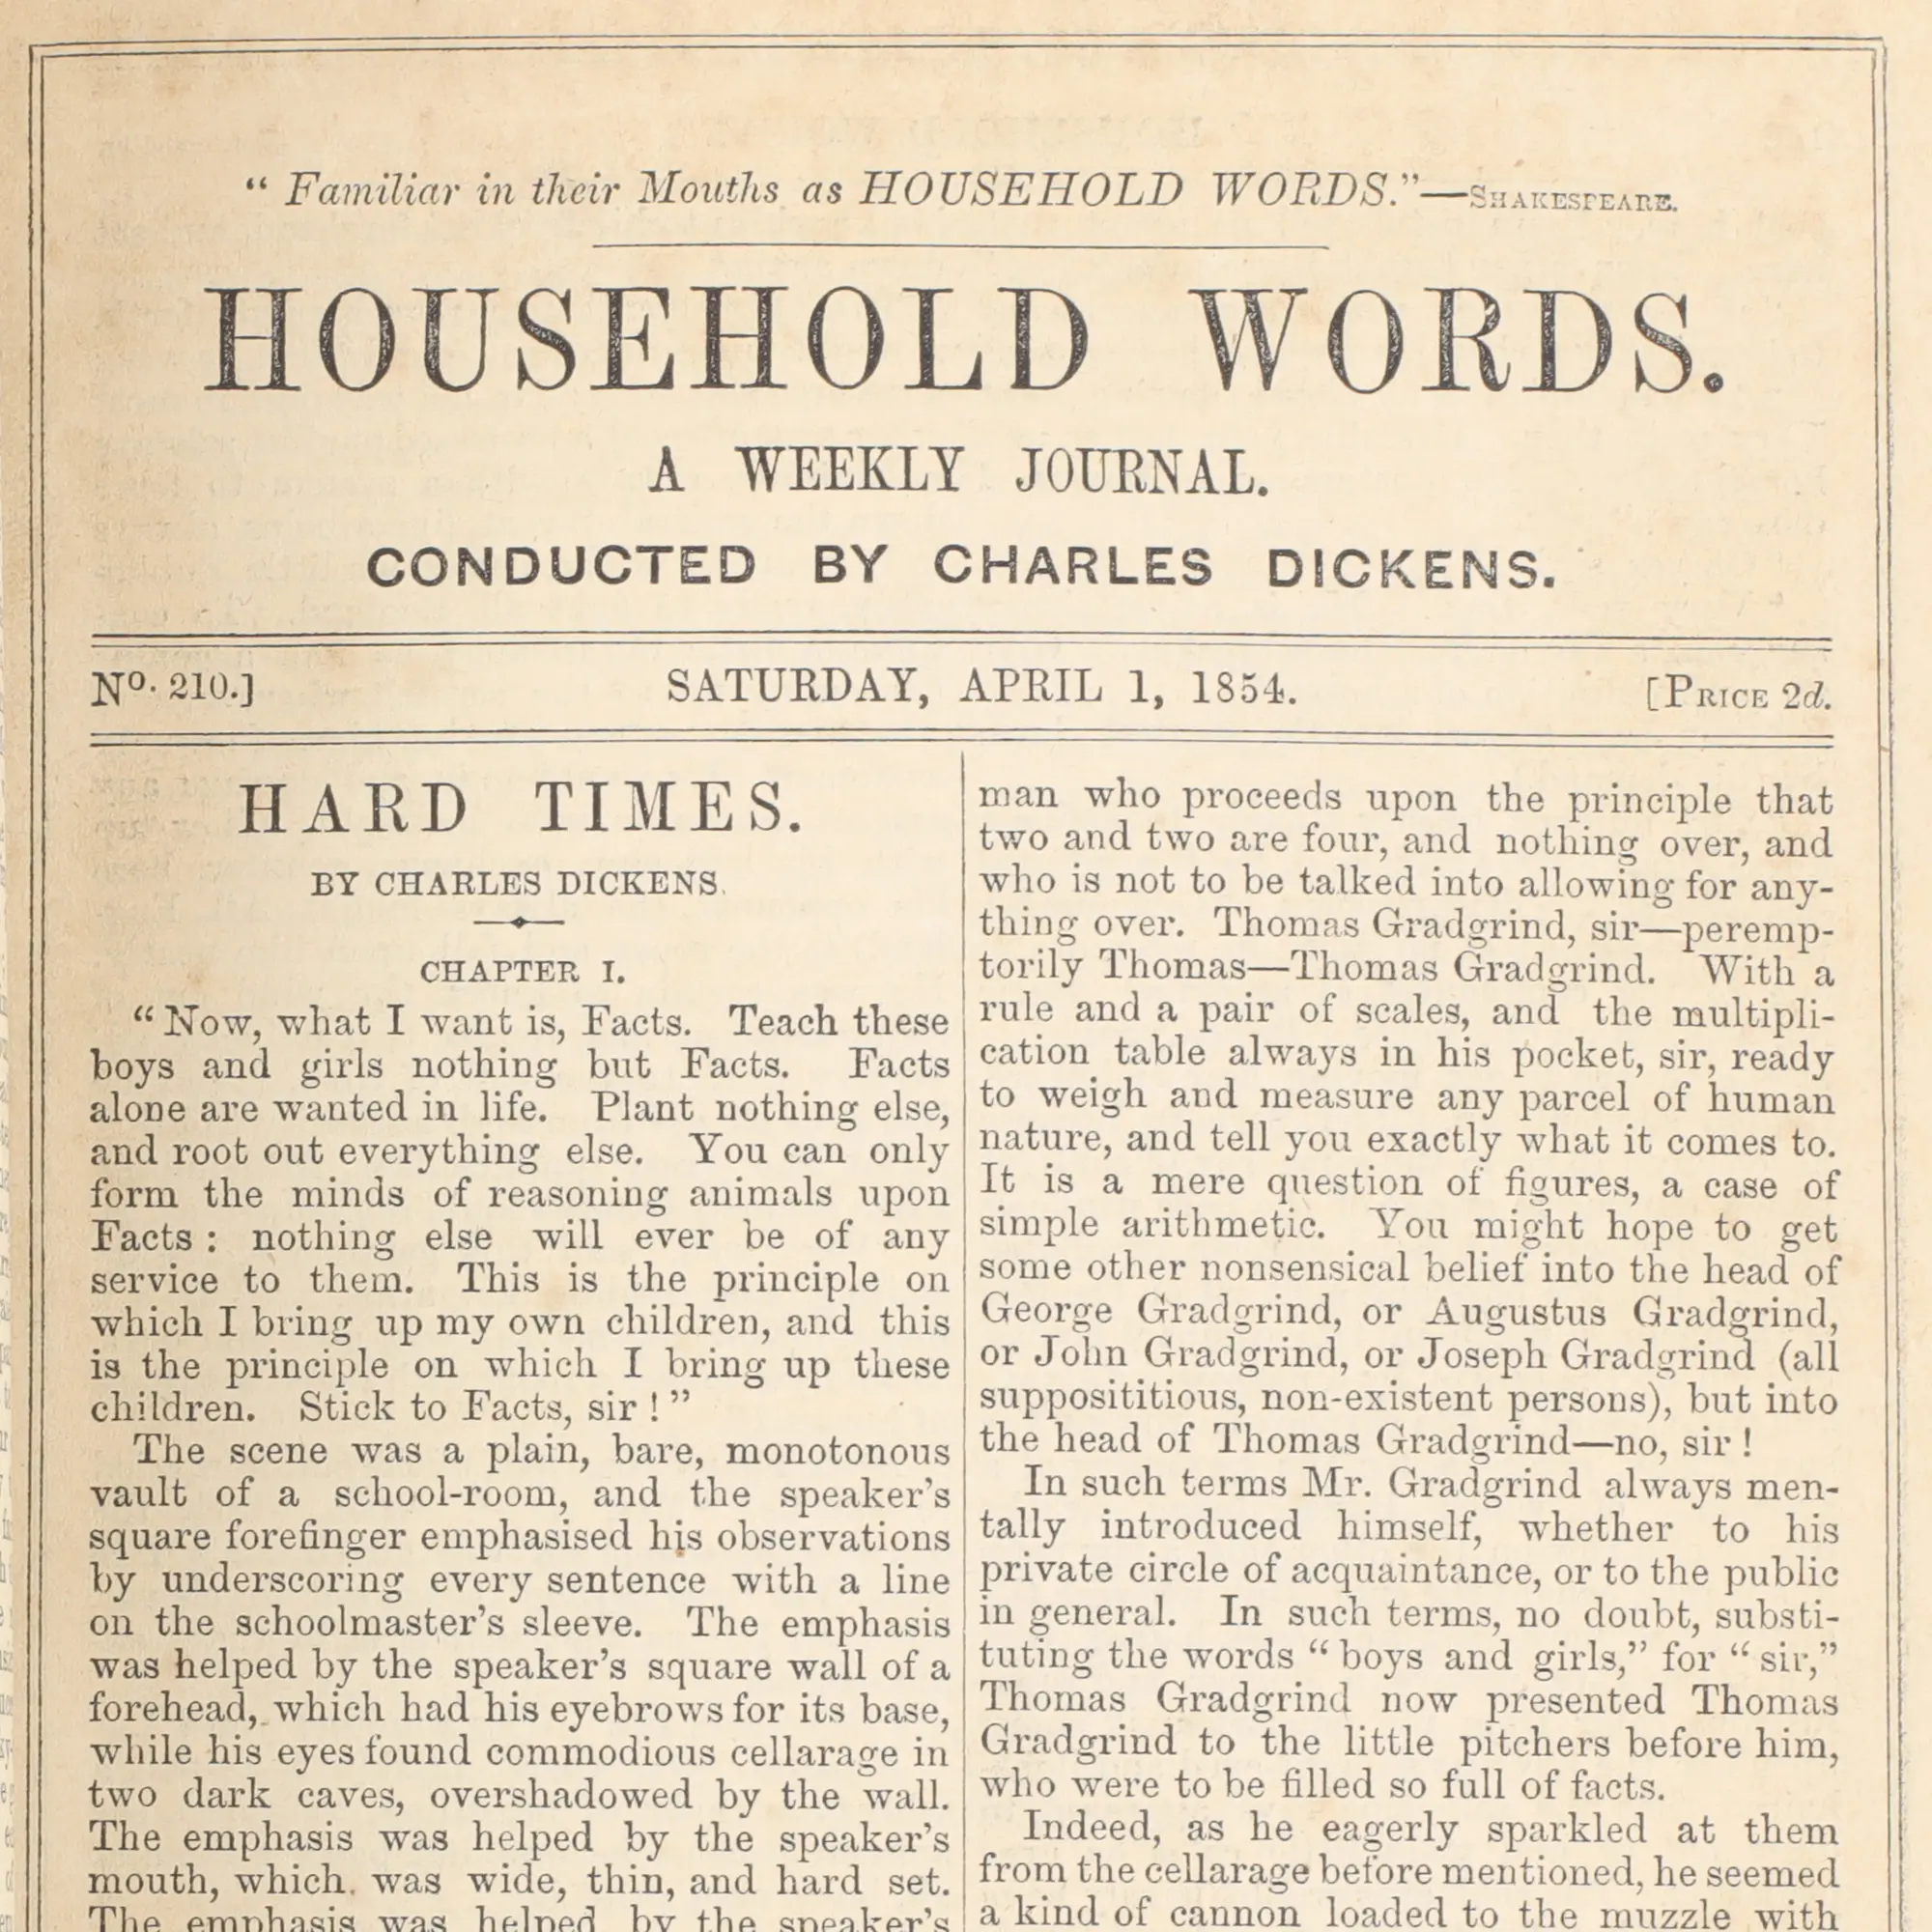 Hard Times in Household Words in Serial, 1854